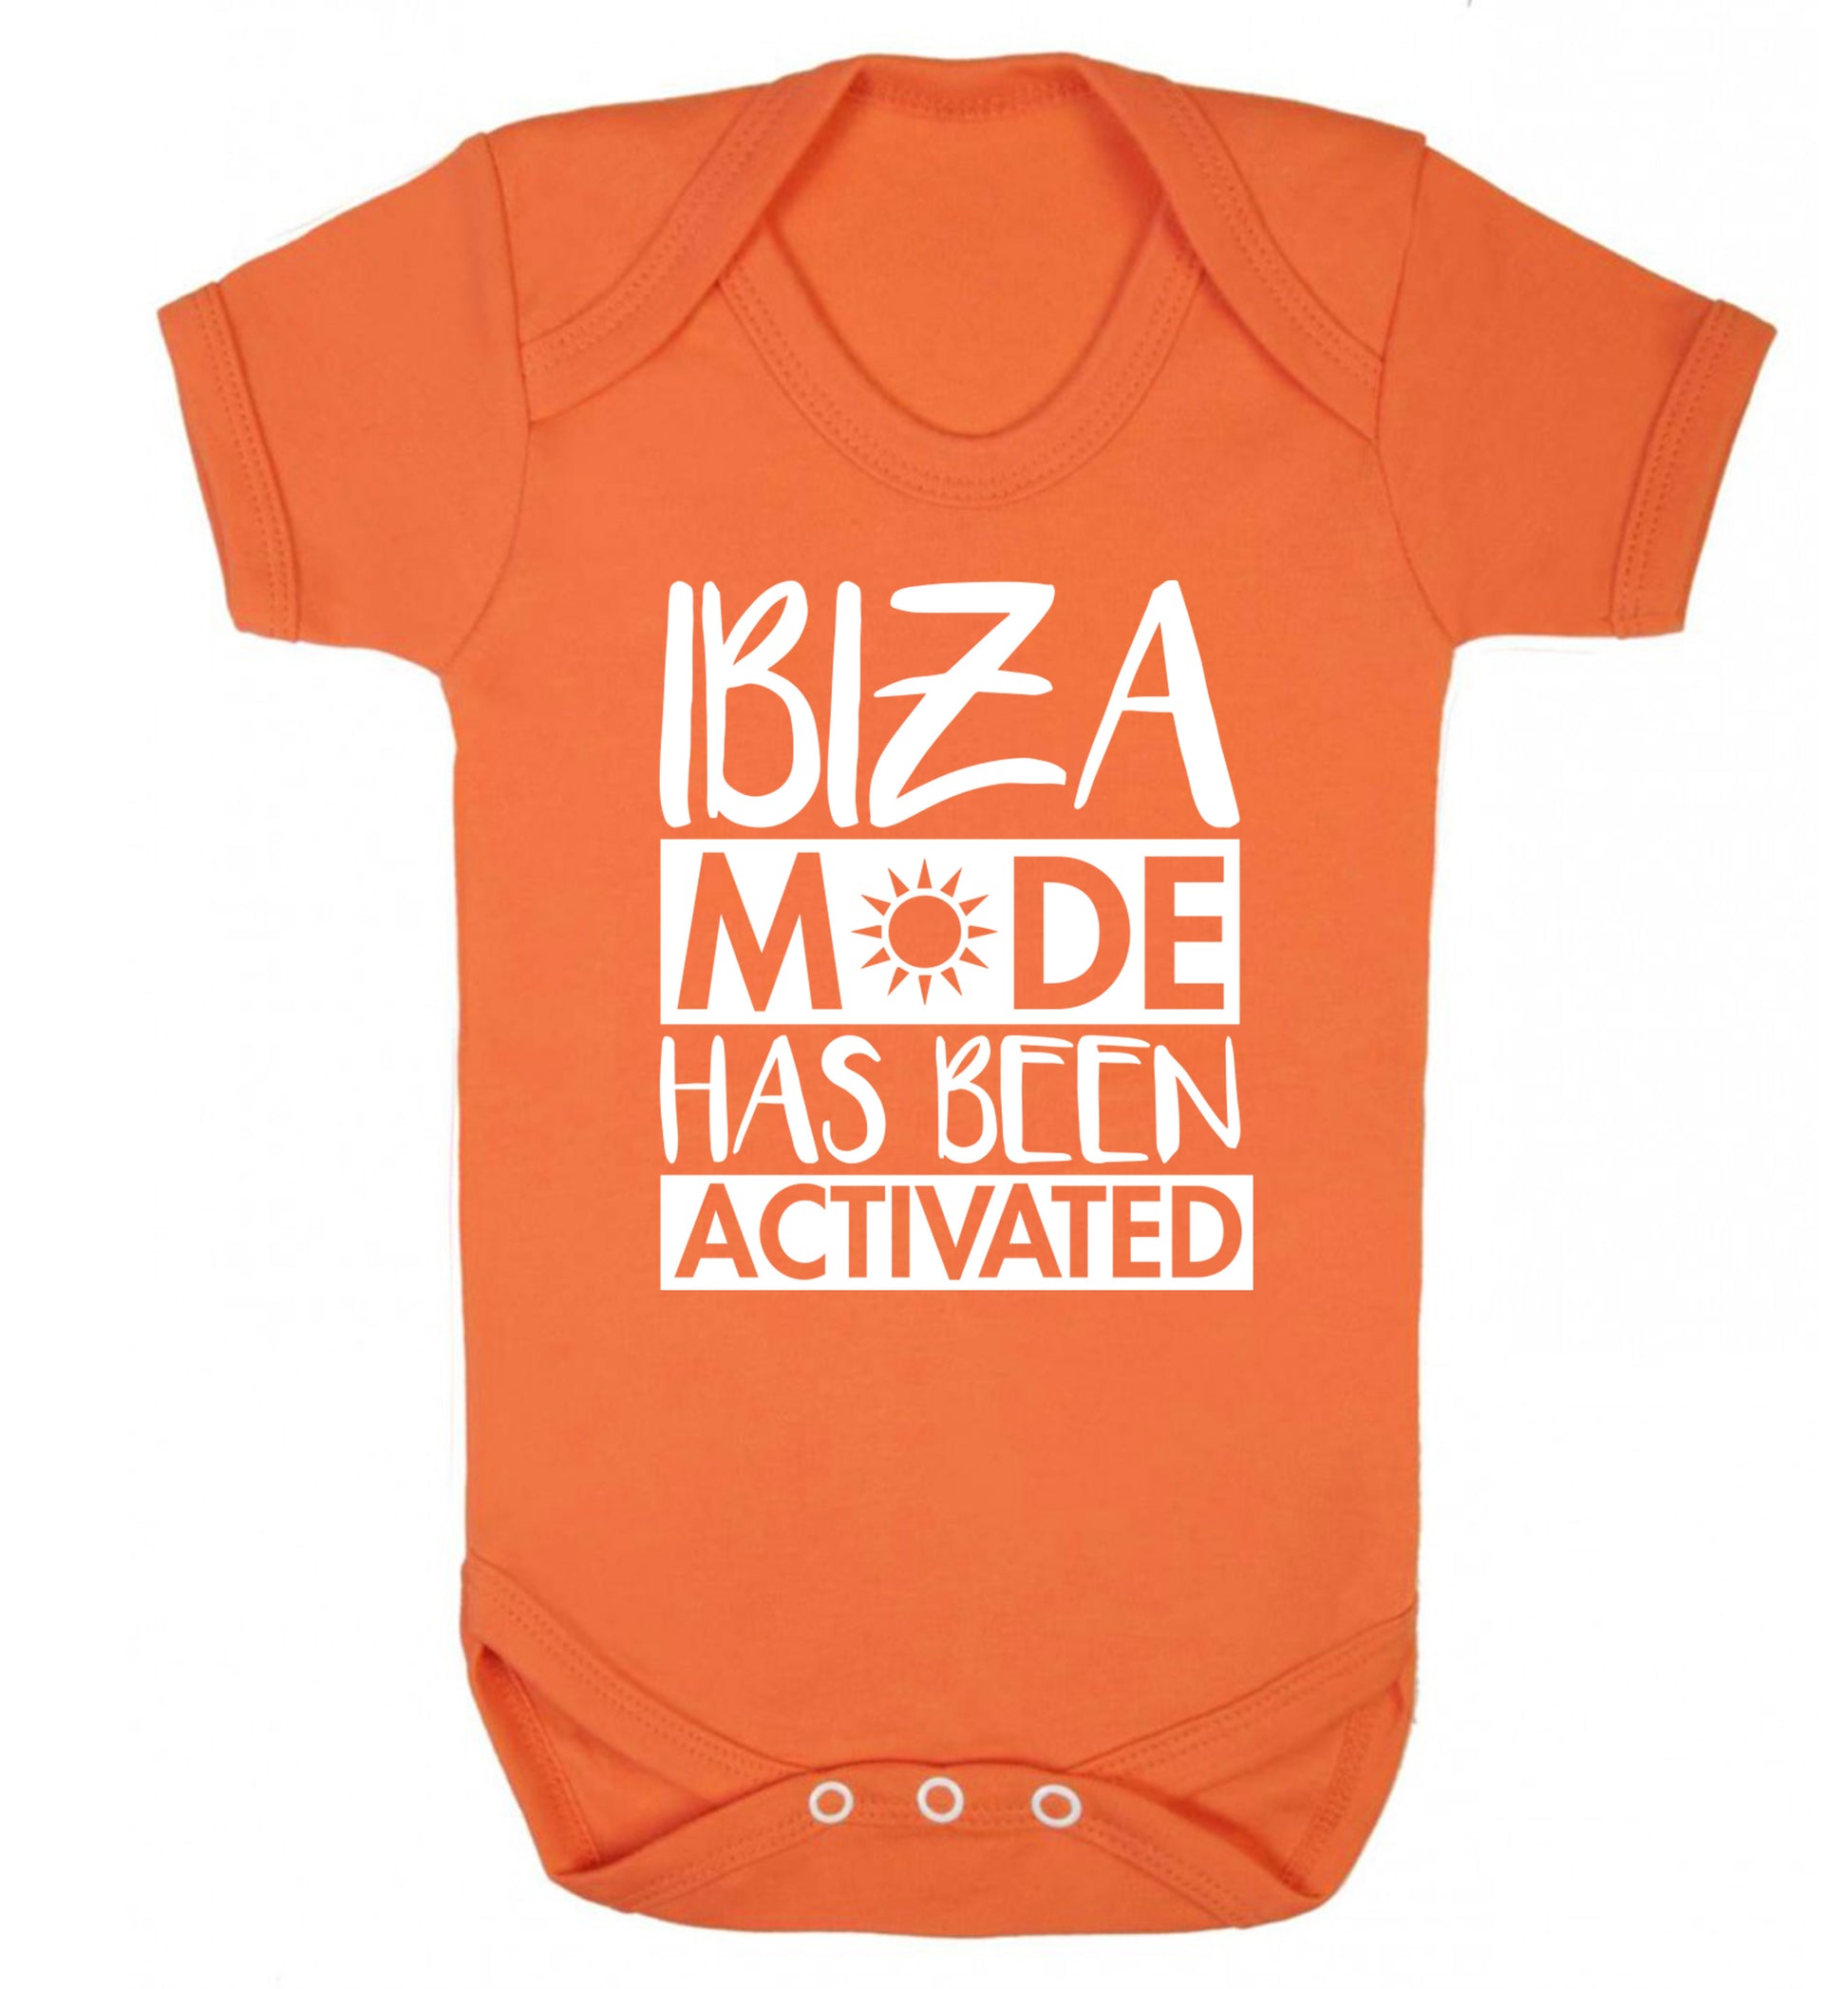 Ibiza mode has been activated Baby Vest orange 18-24 months